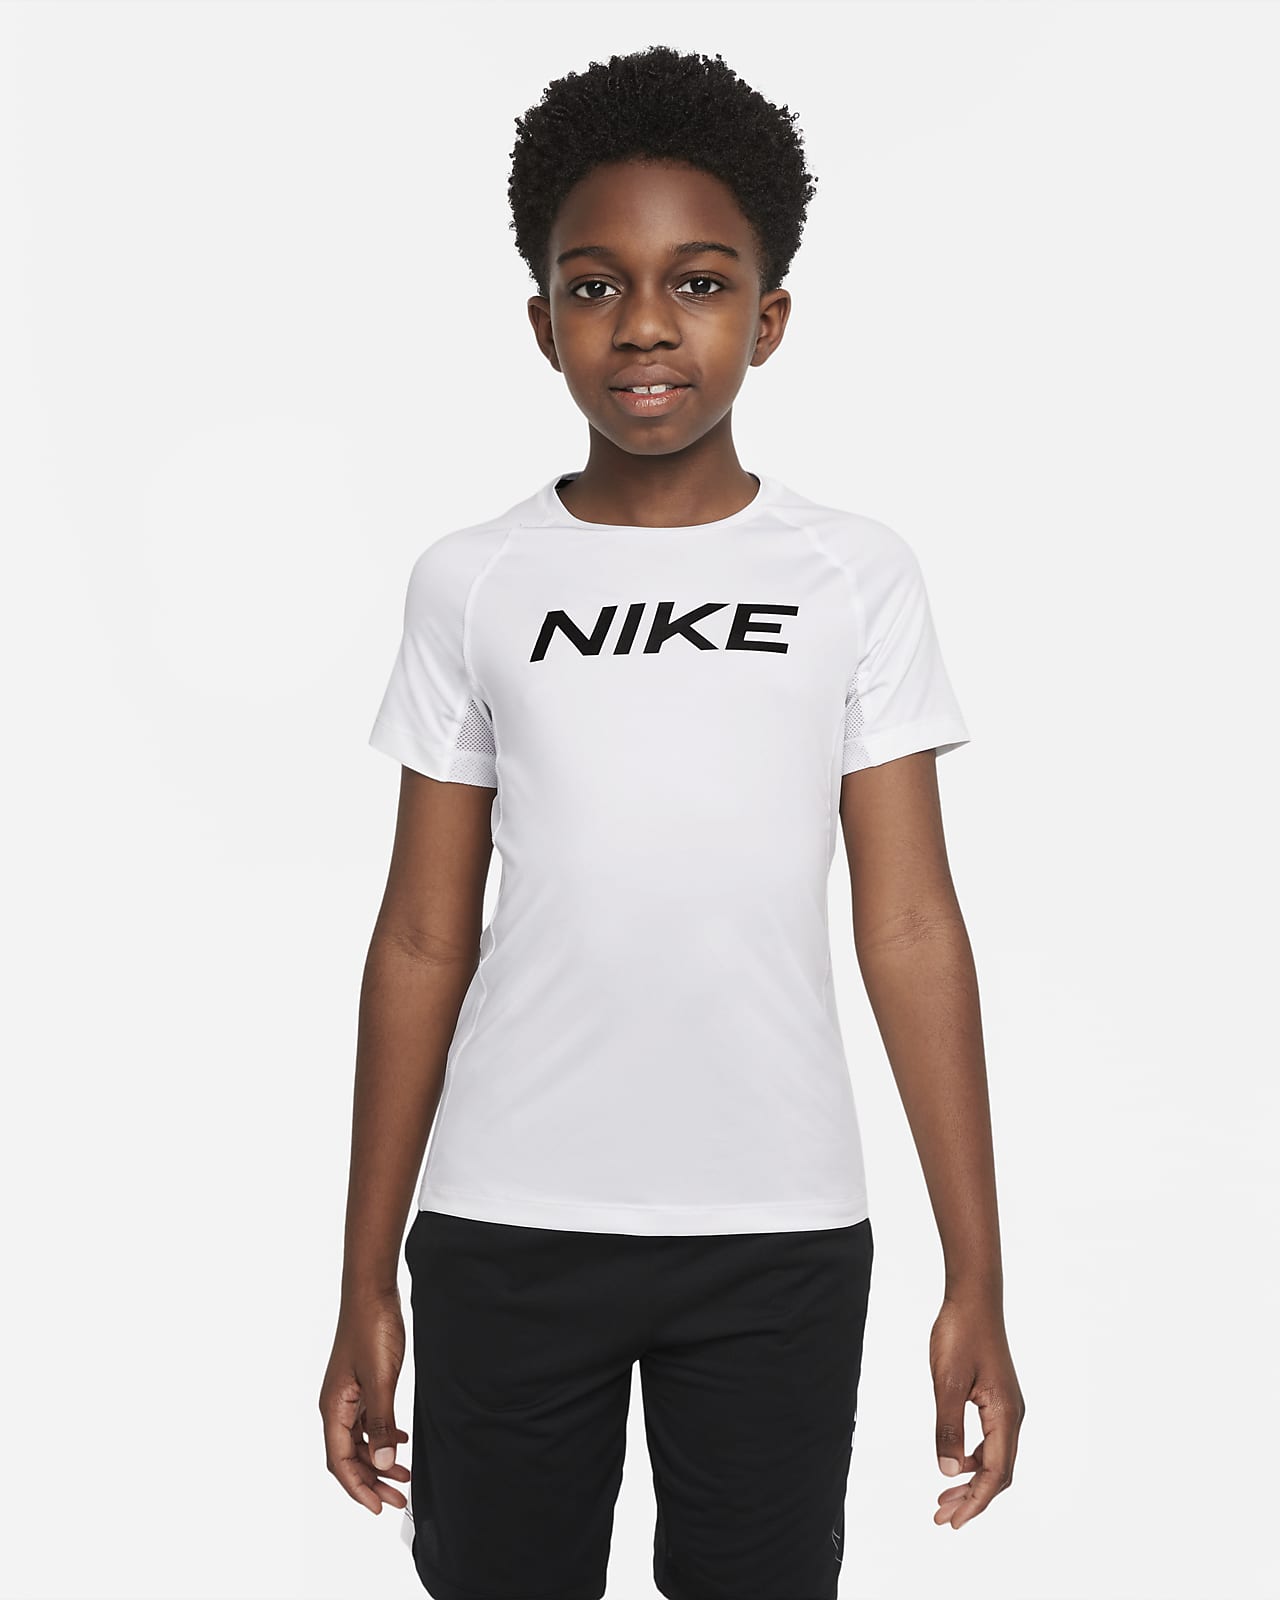 Nike Yoga Dri-FIT Men's Short-Sleeve Top. Nike.com